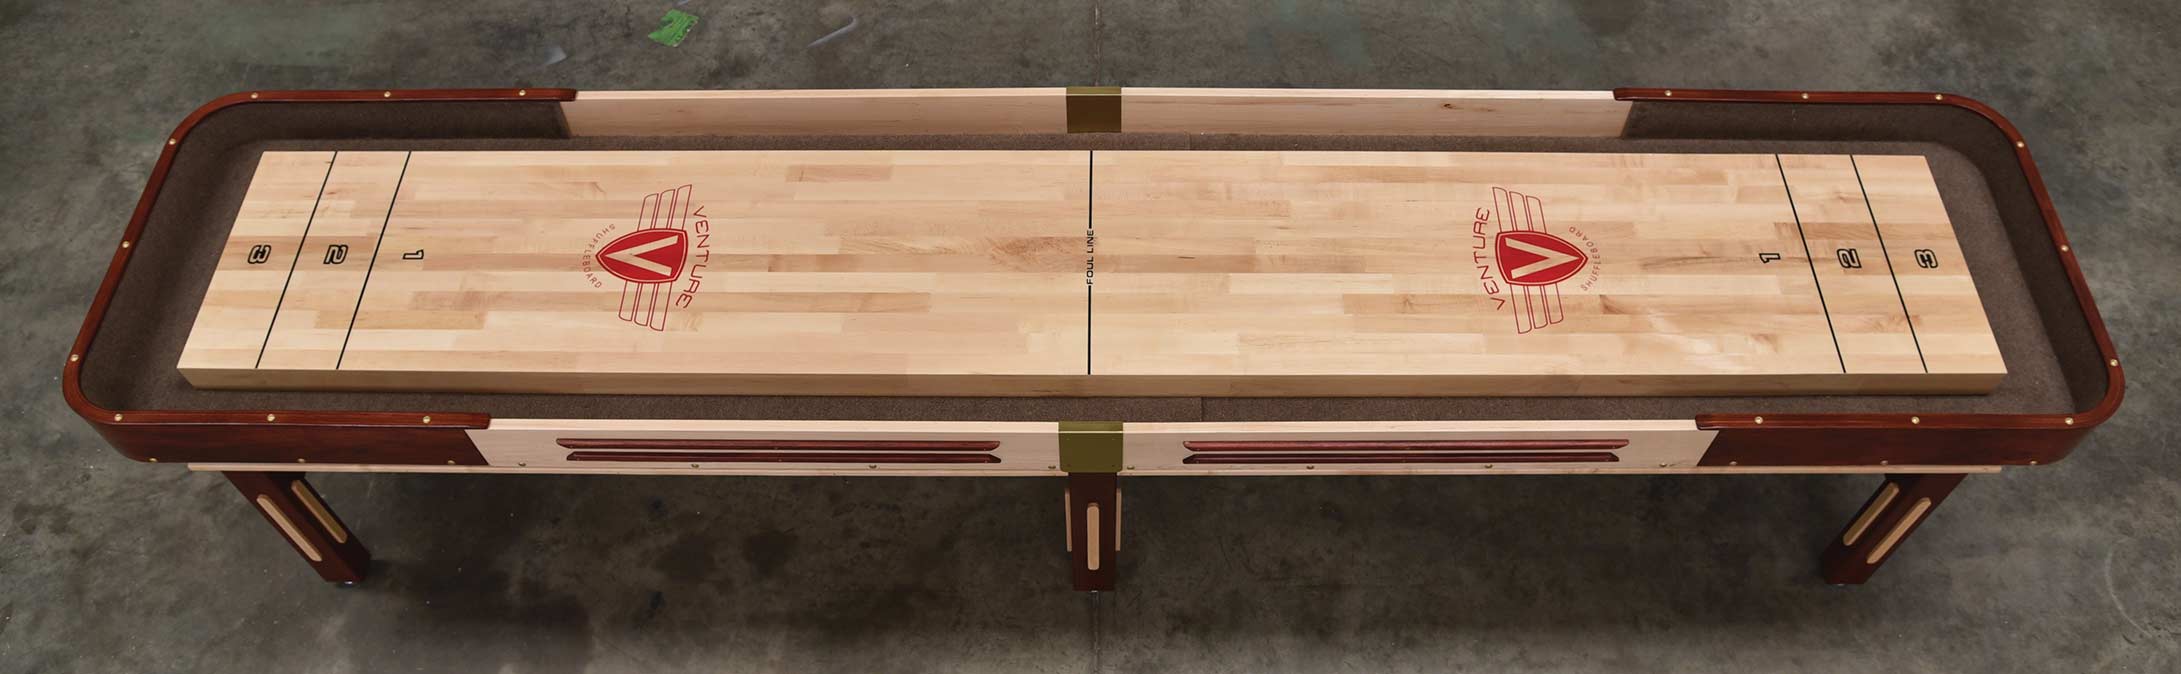 Venture Grand Deluxe 22' Shuffleboard Table